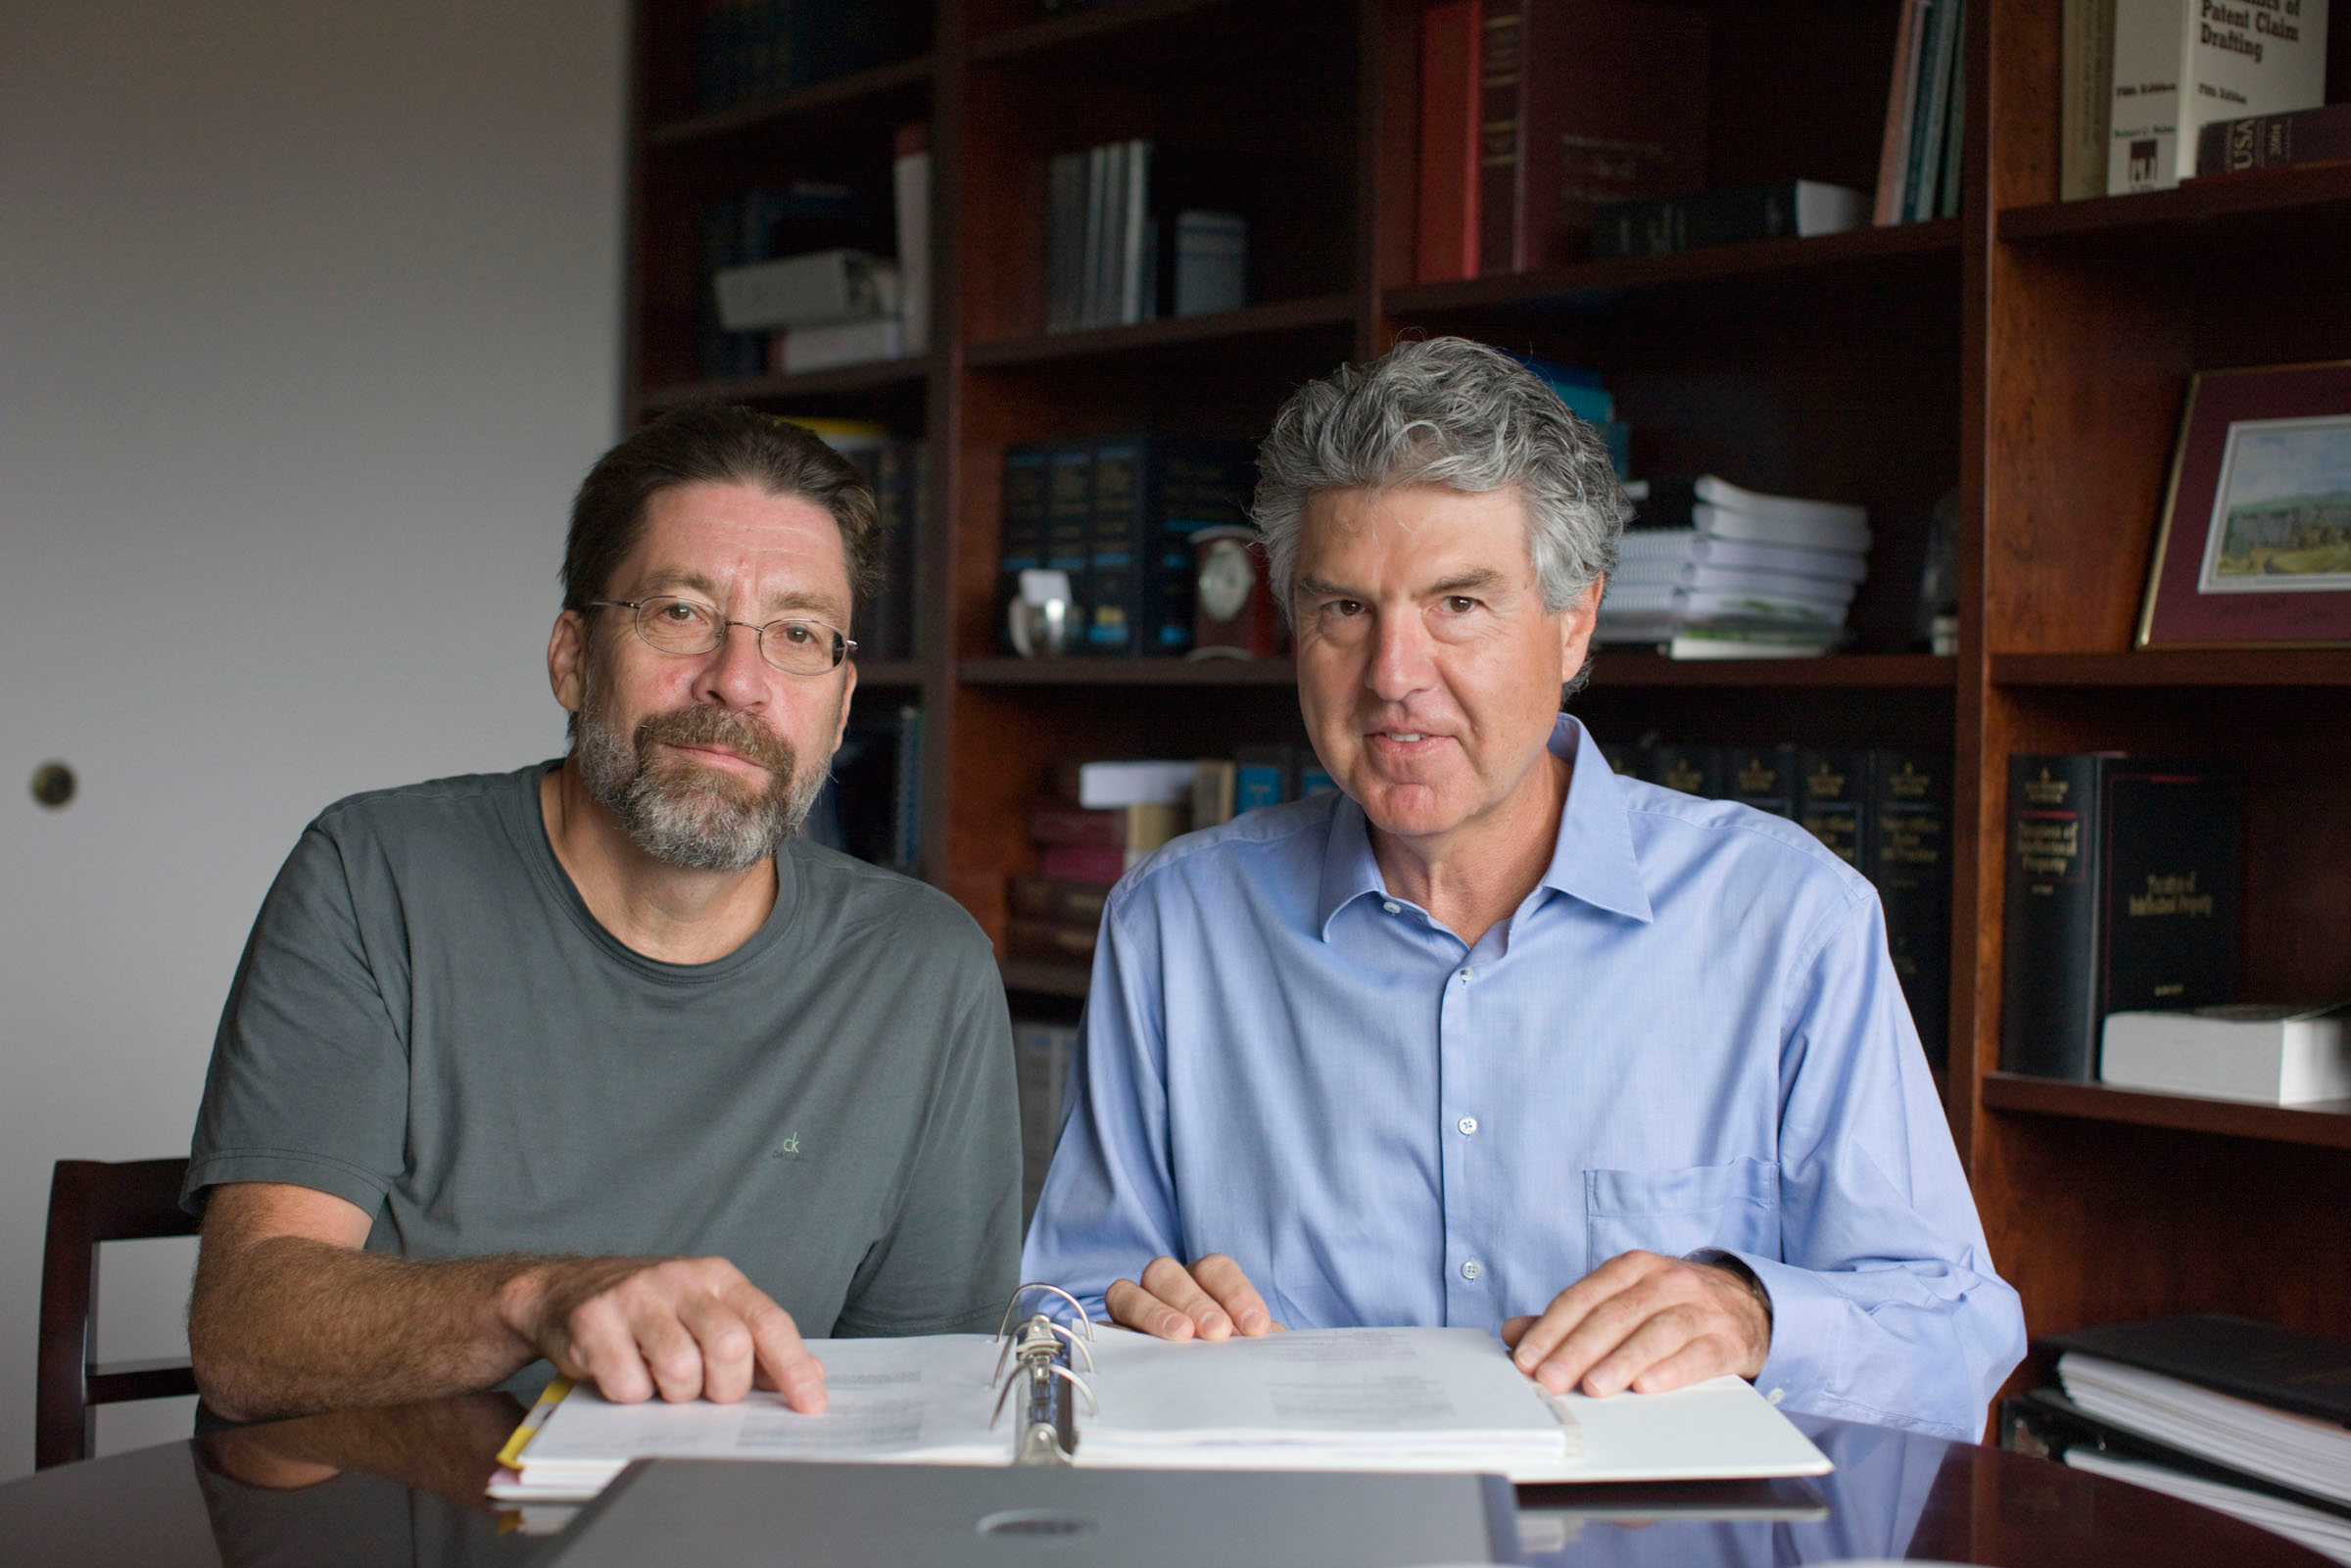 Kevin R. Lynch and Timothy L. Macdonald sit at a table smiling at the camera